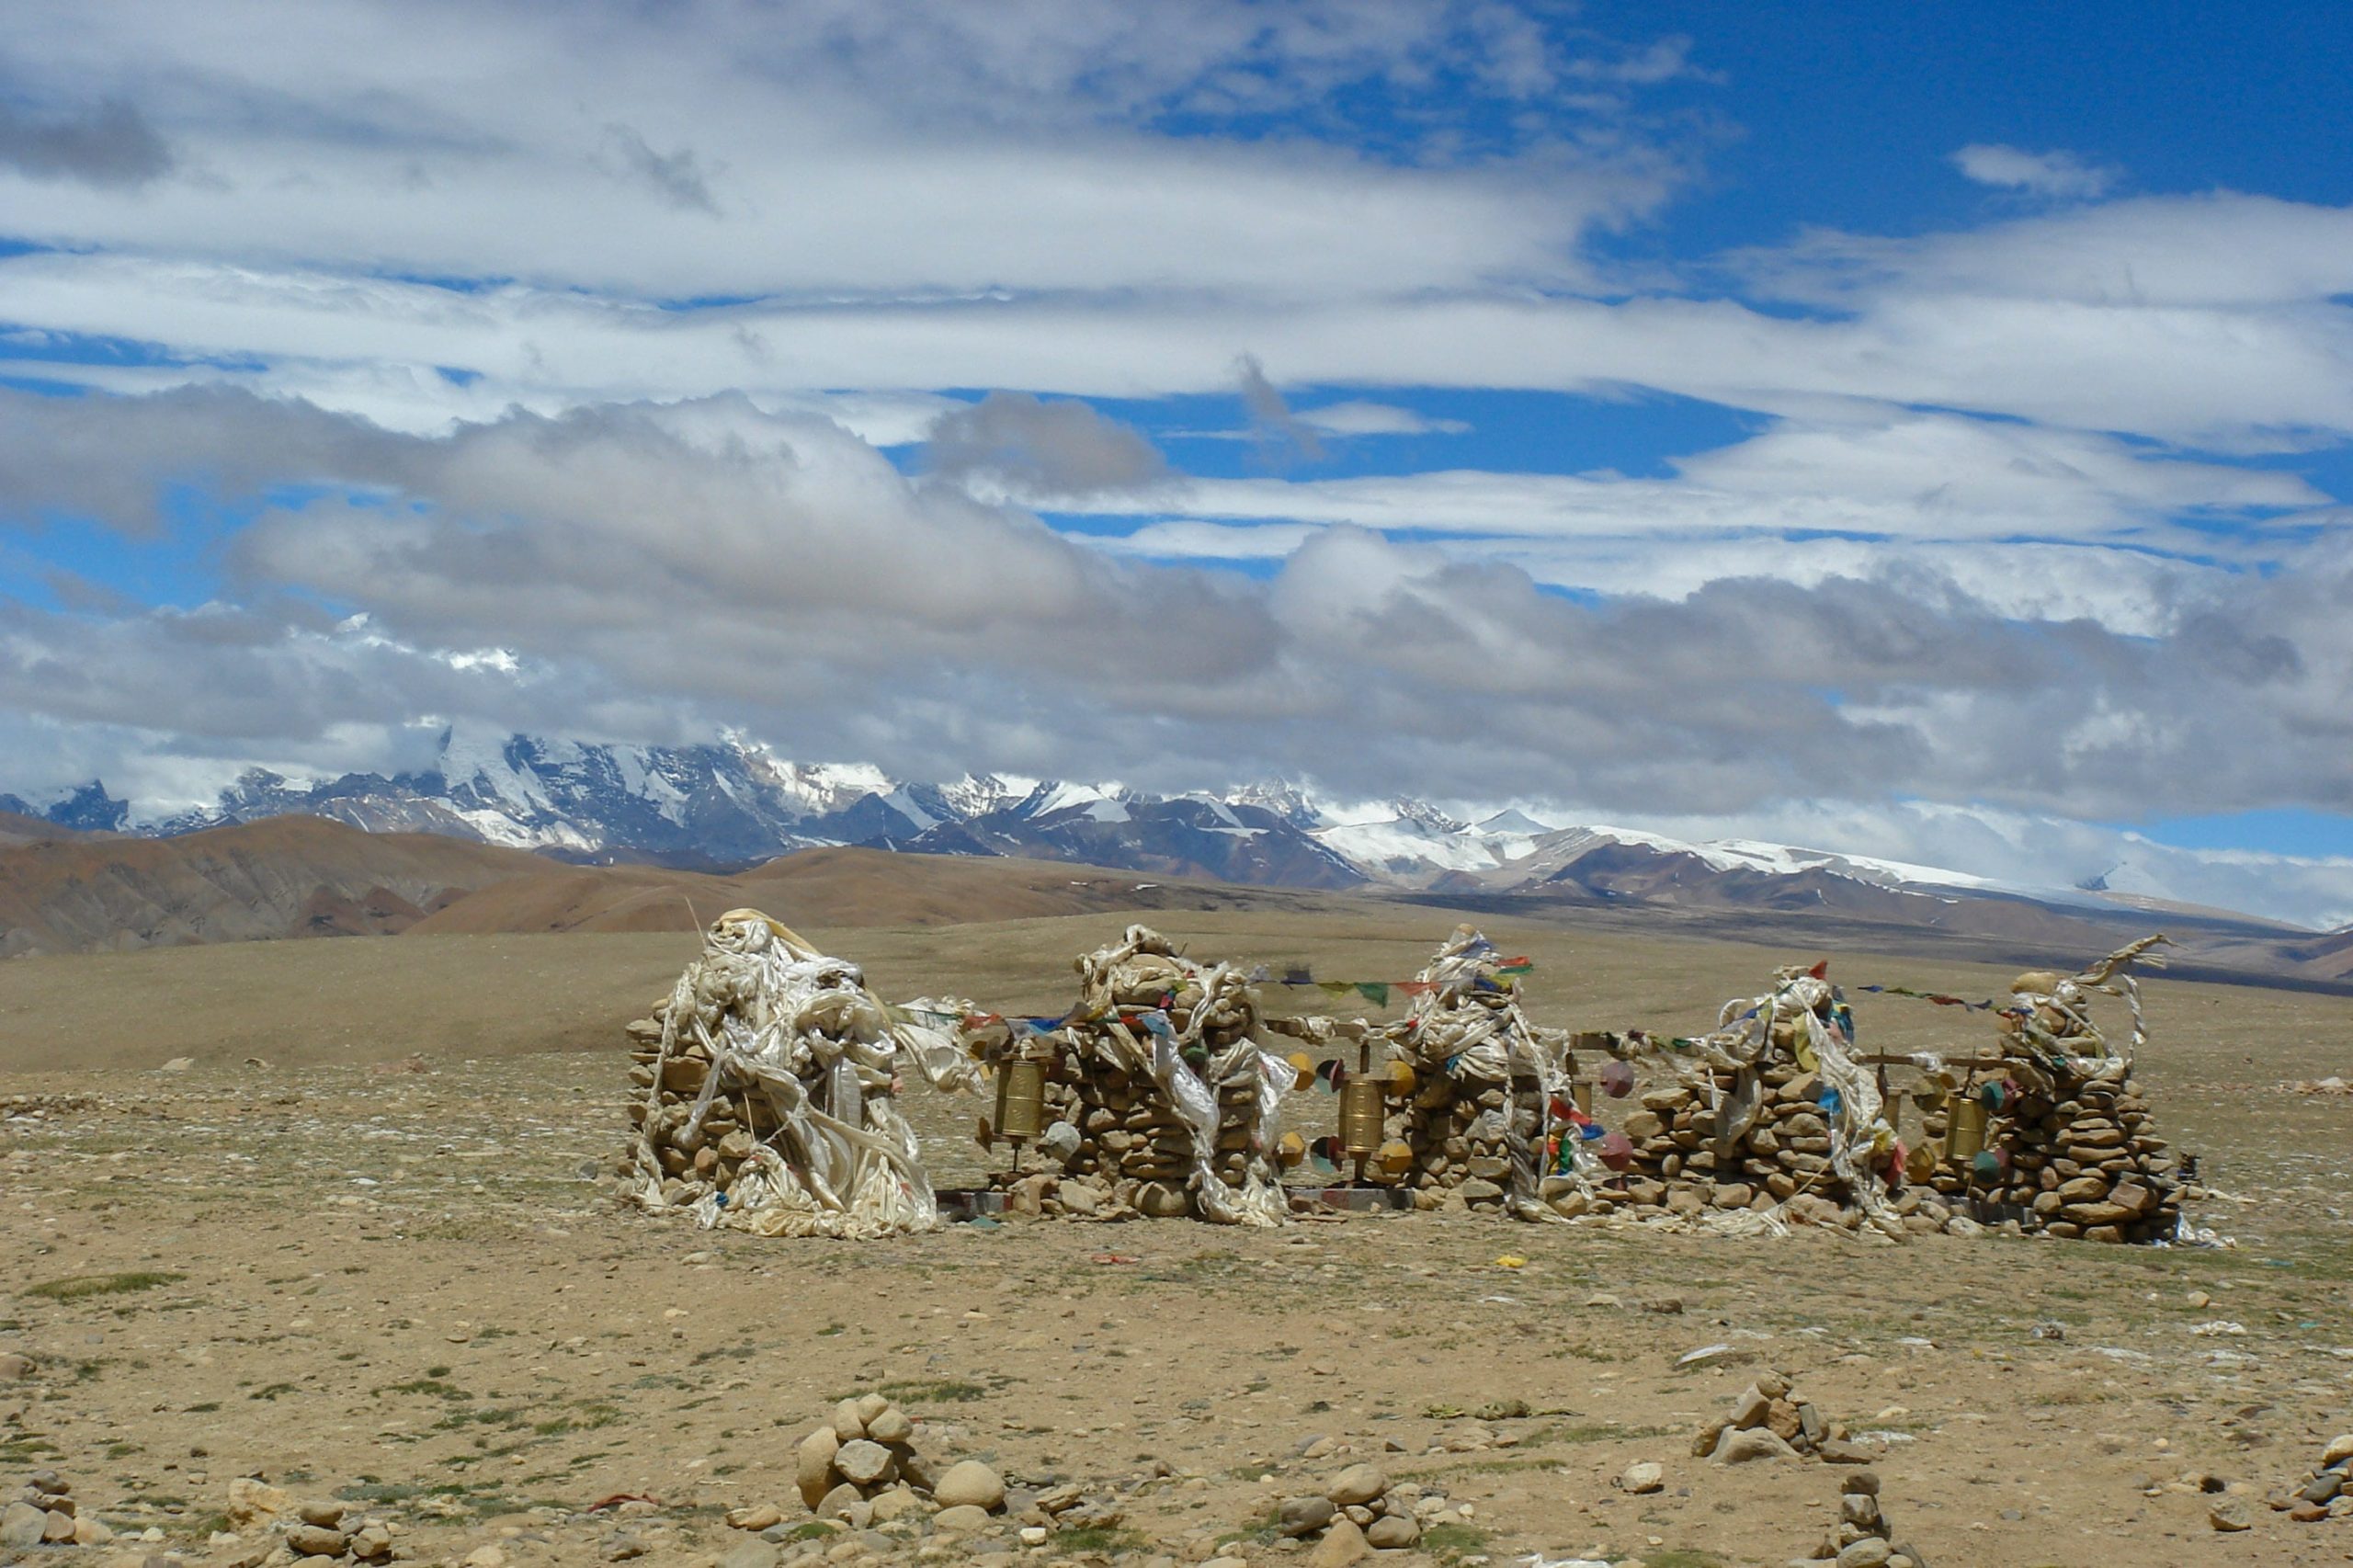 Tibet Everest Base Camp Trek